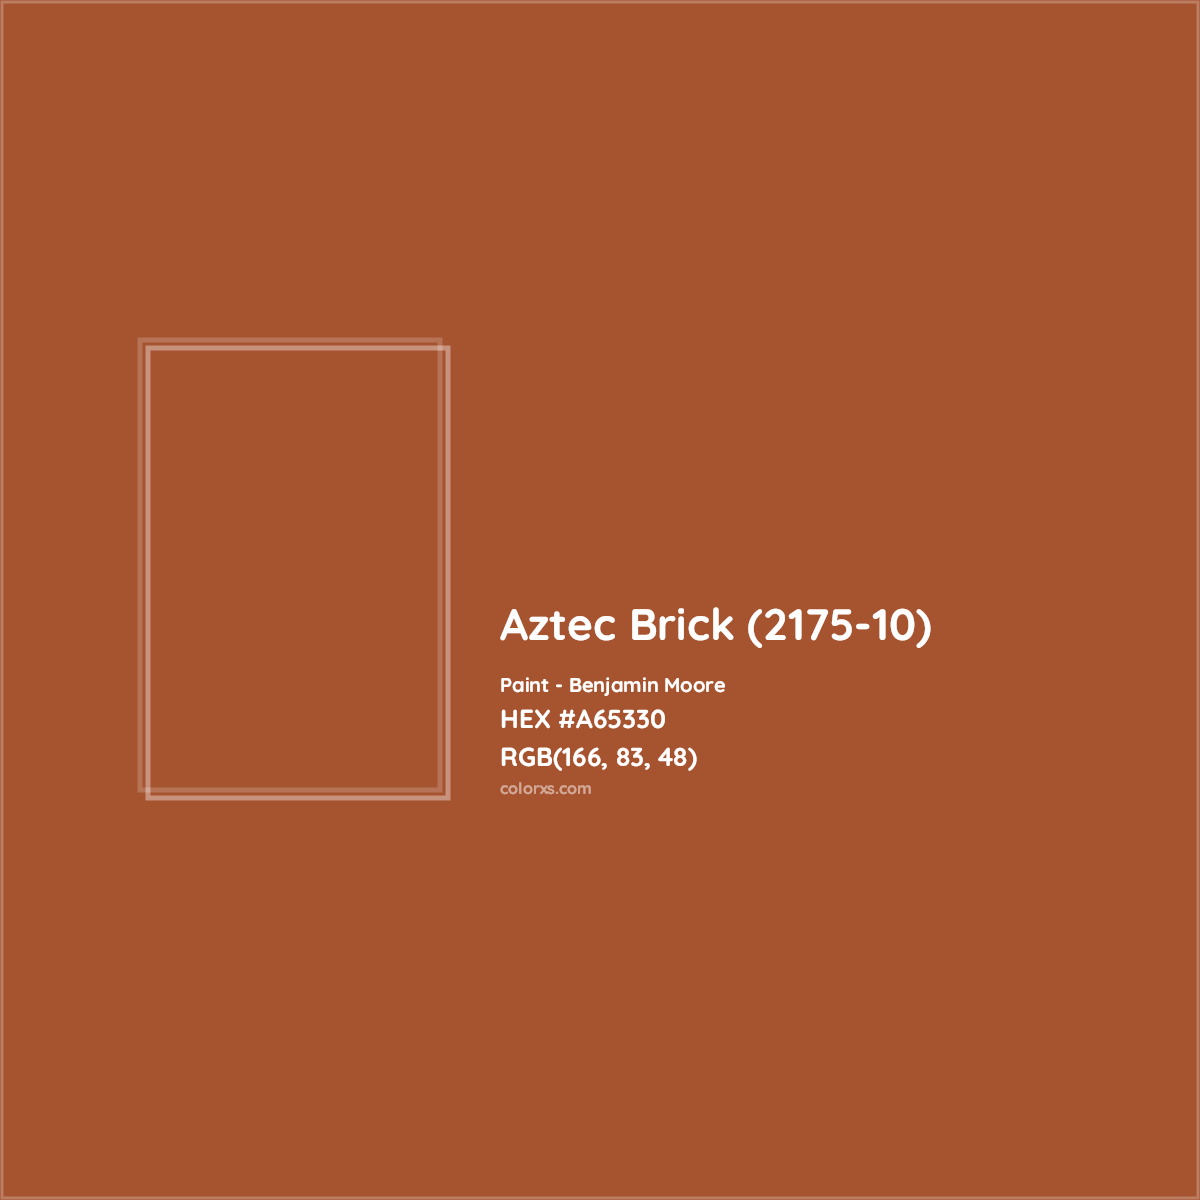 Benjamin Moore Aztec Brick (2175-10) Paint color codes, similar